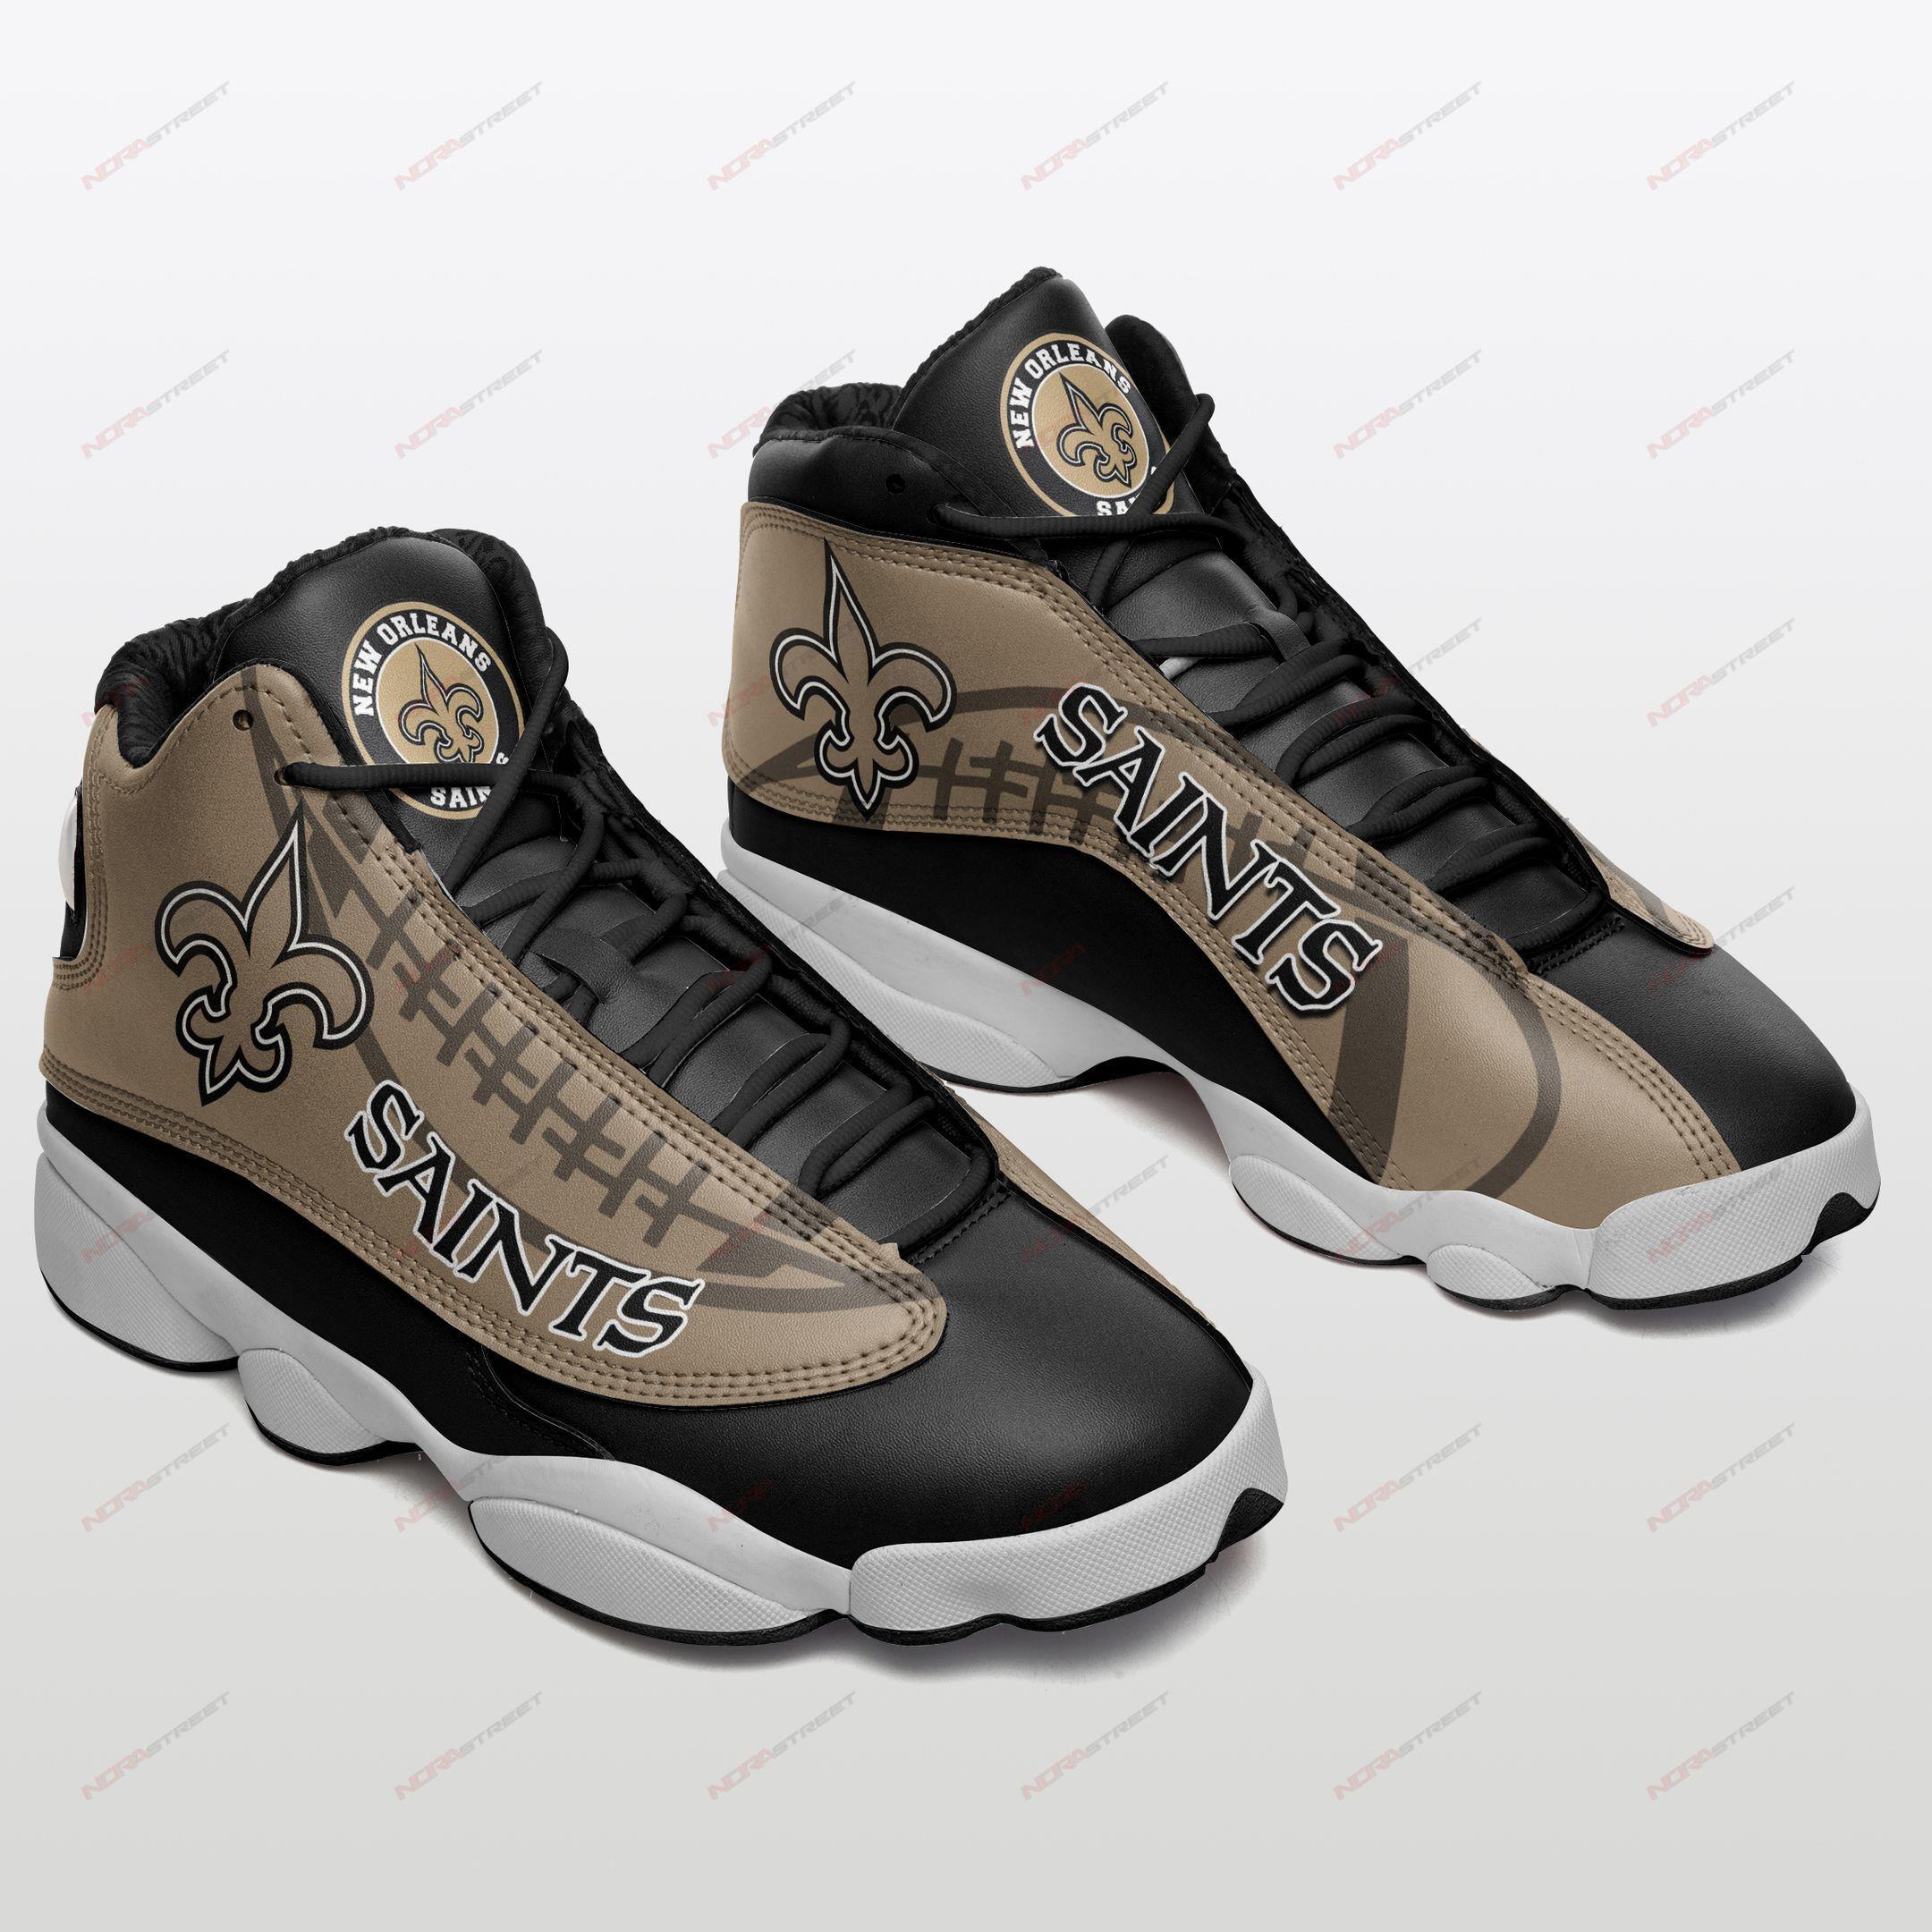 New Orleans Saints Air Jordan 13 Sneakers Sport Shoes